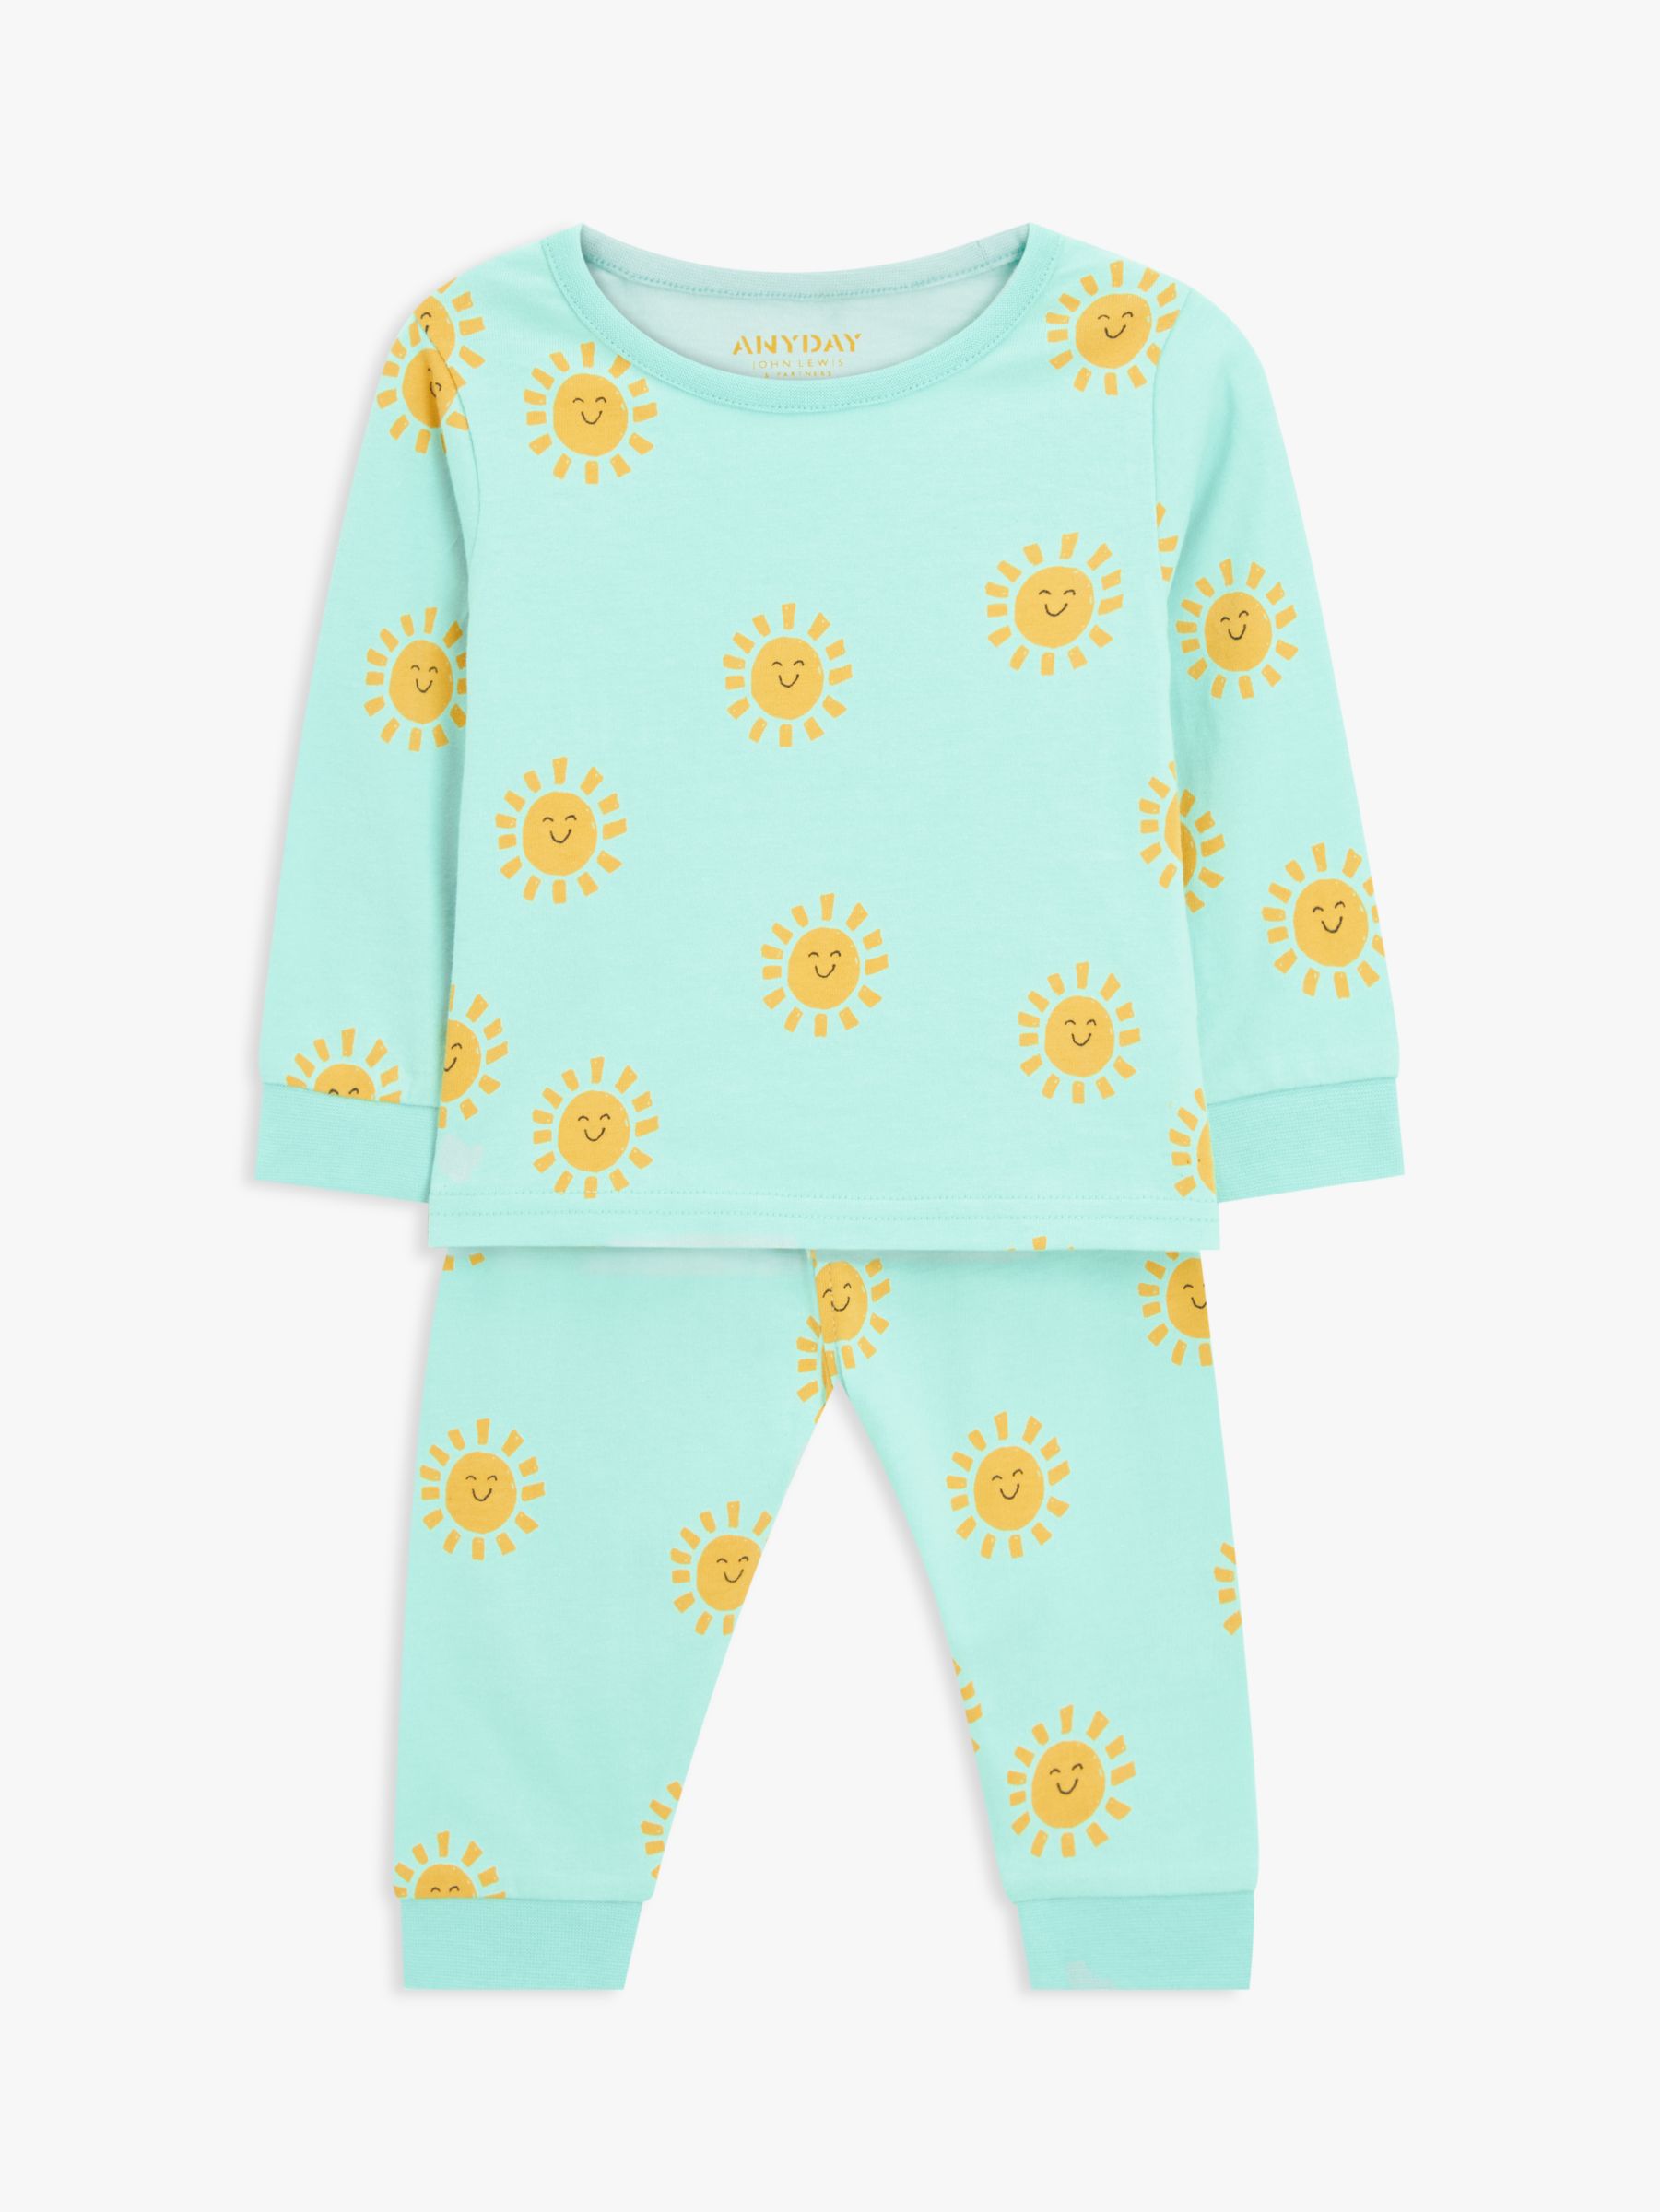 John Lewis ANYDAY Baby Sunshine Print Pyjamas, Green/Yellow